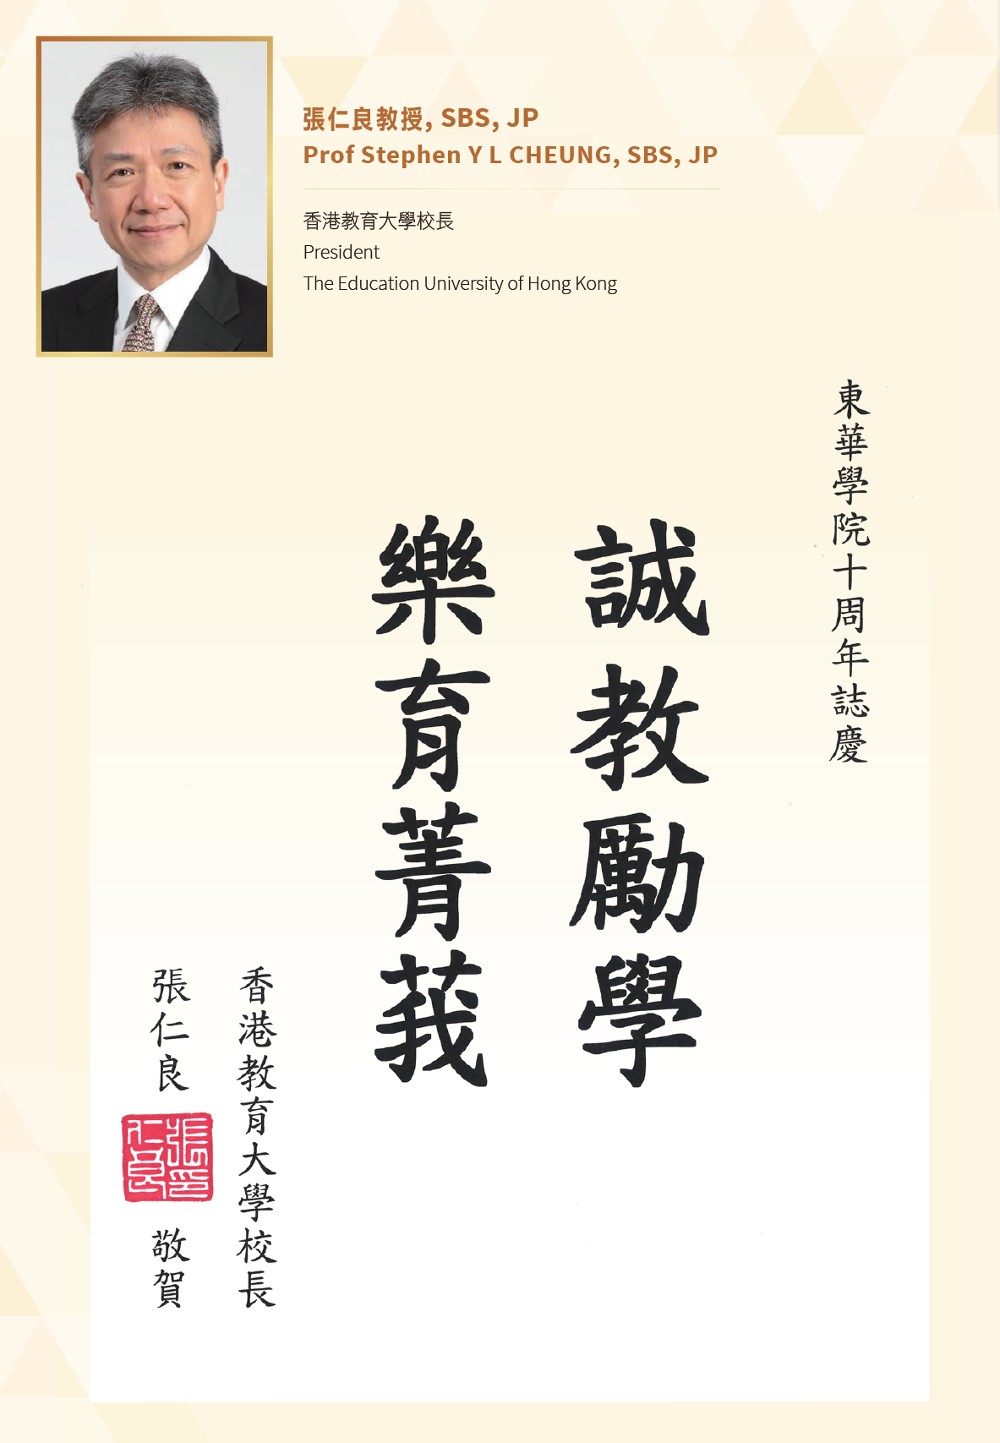 President of The Education University of Hong Kong